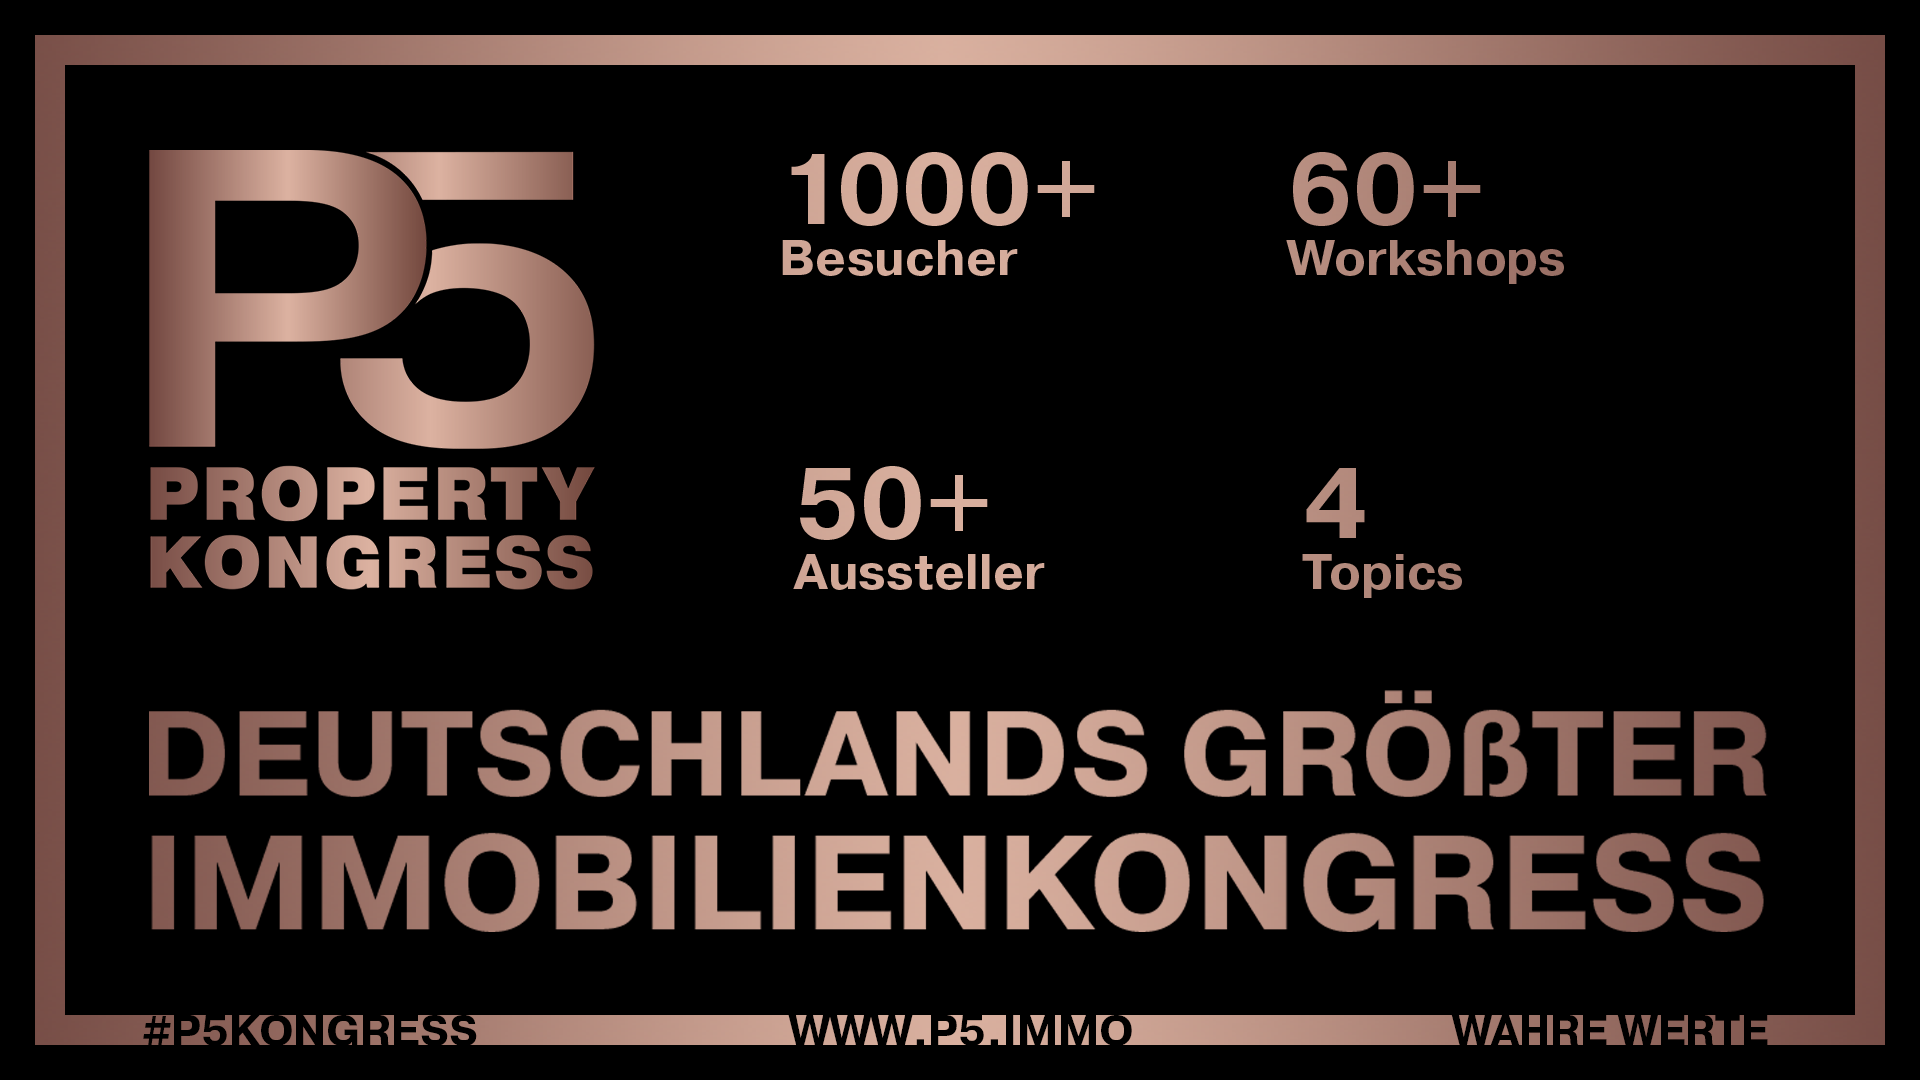 P5 Property Kongress - Deutschlands größter Immobilienkongress- Die neue Plattform der Immobilienbranche